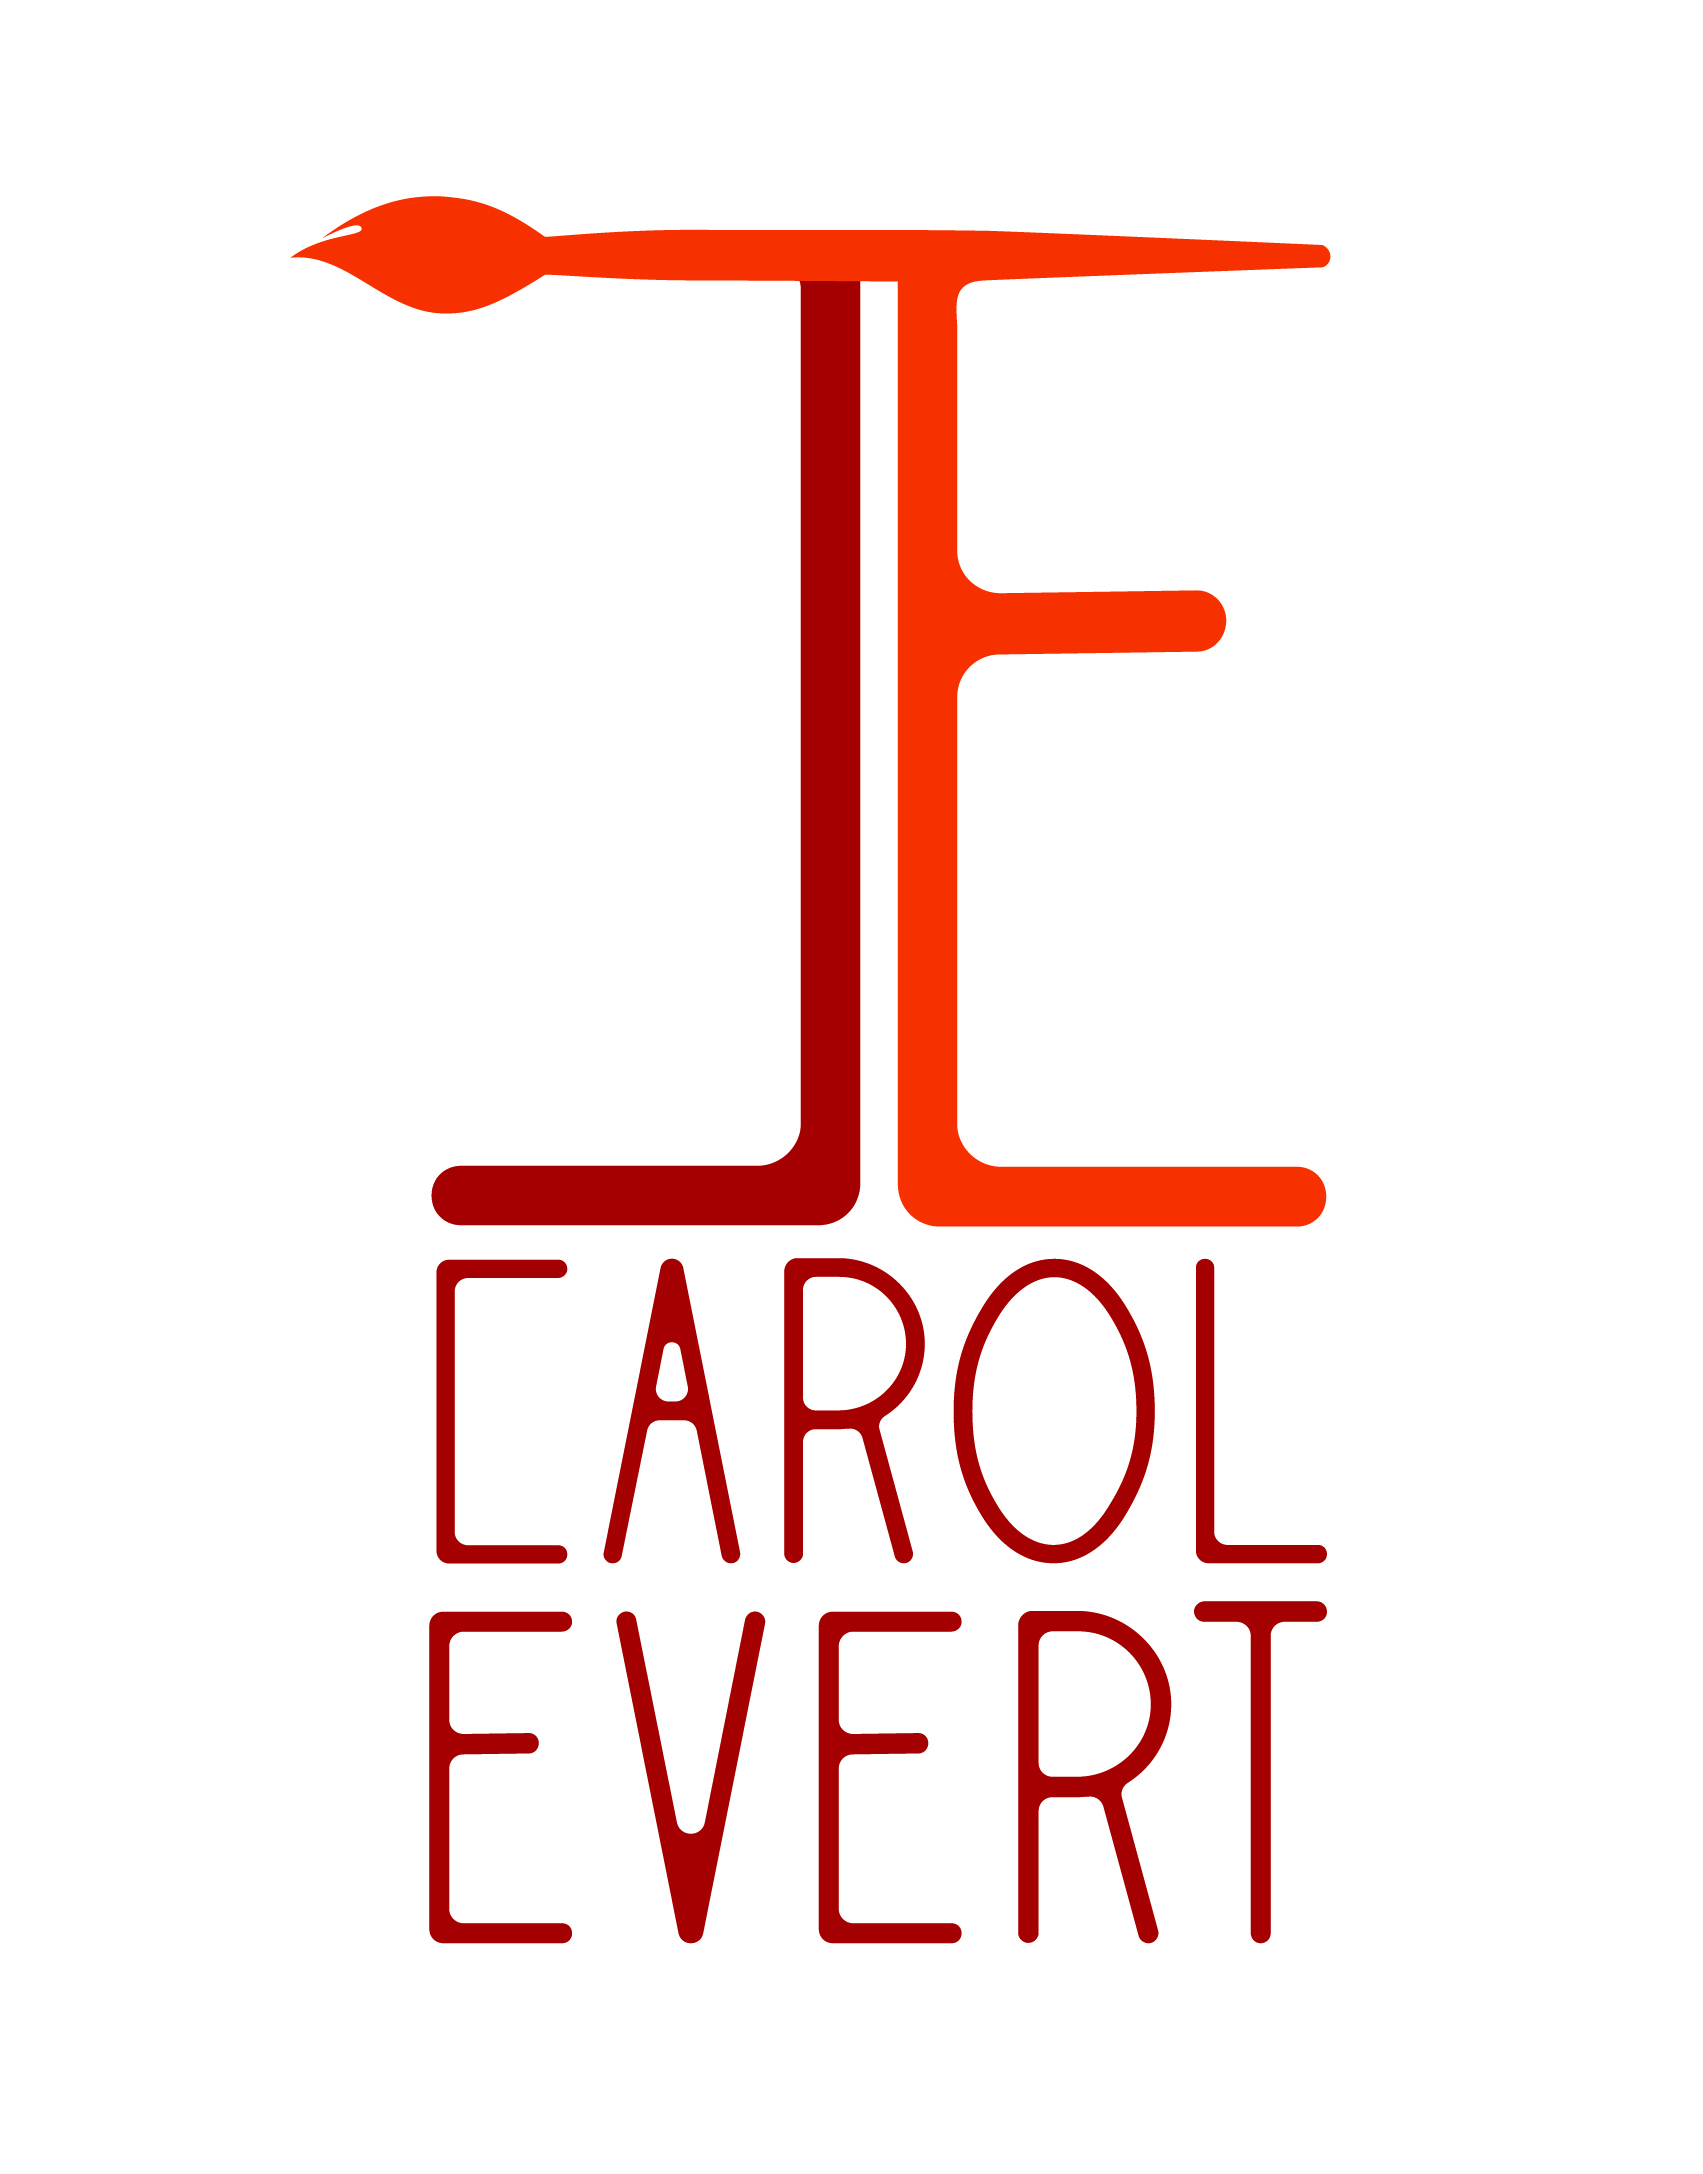 Carol Evert Art logo